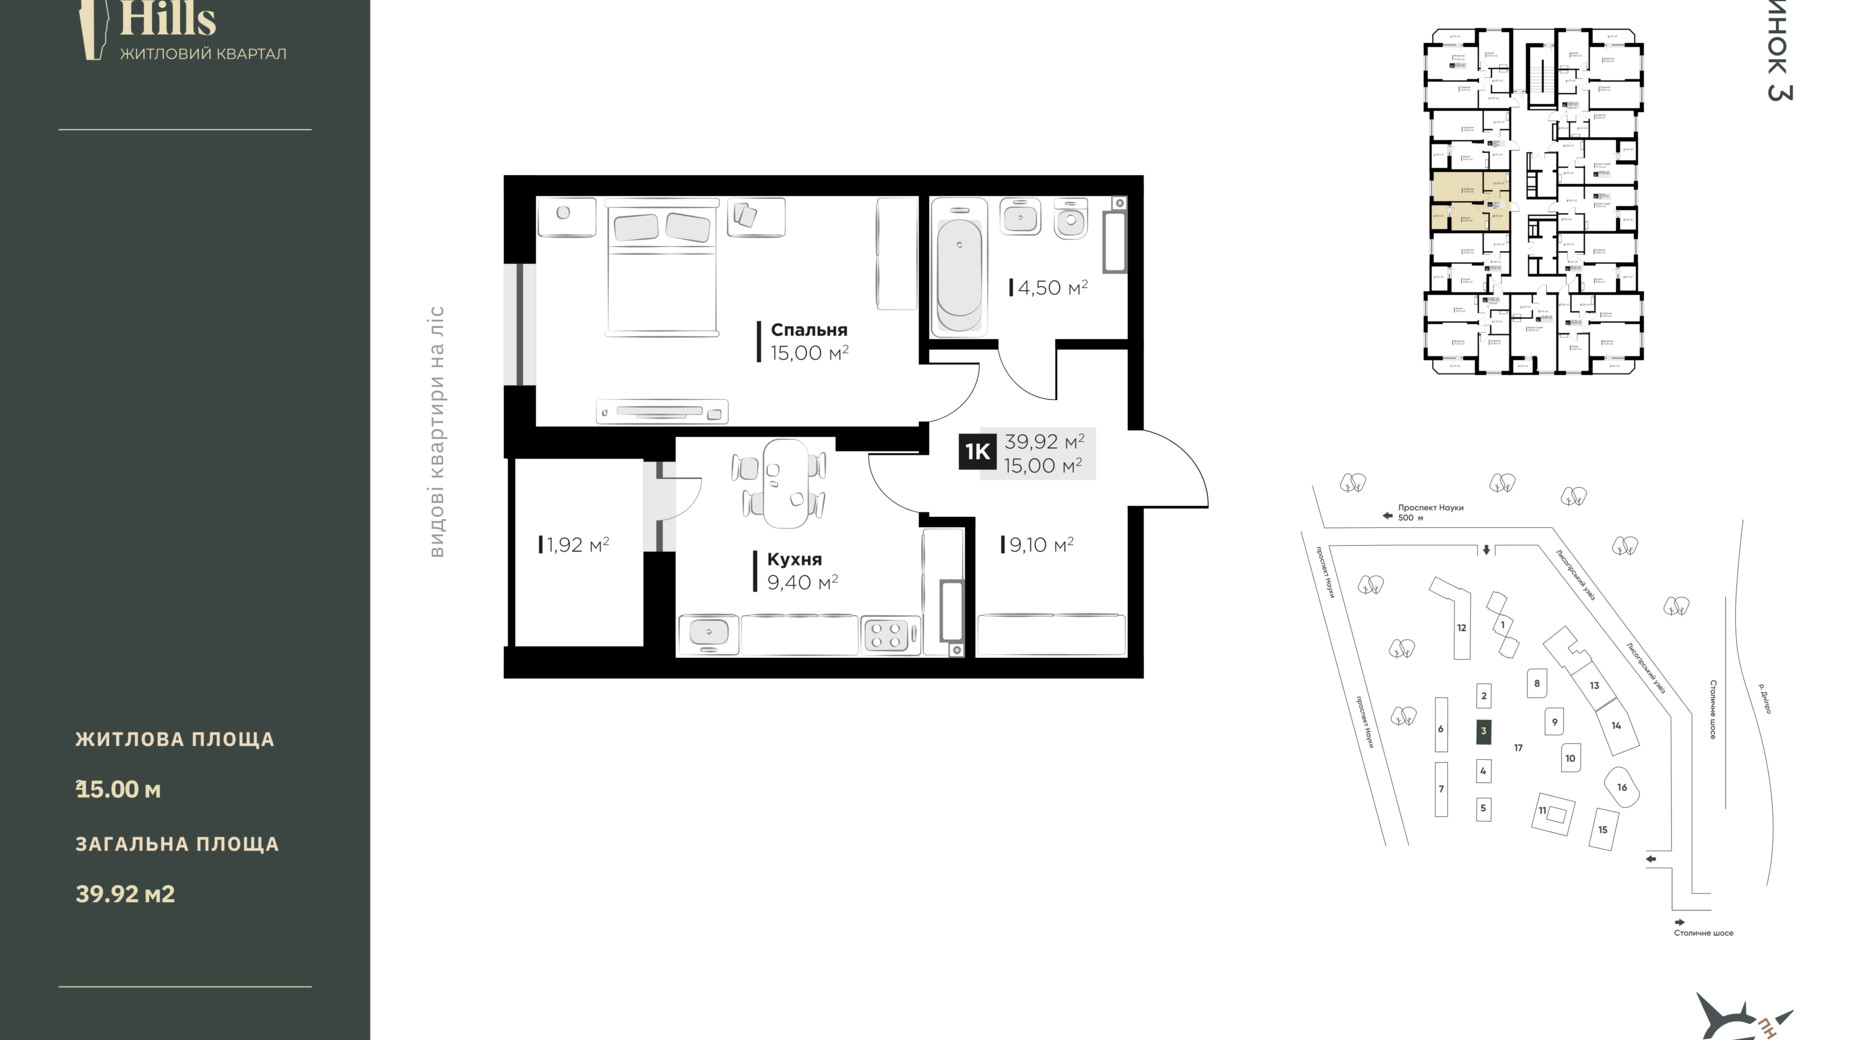 Планування 1-кімнатної квартири в ЖК Central Hills 39.92 м², фото 592770